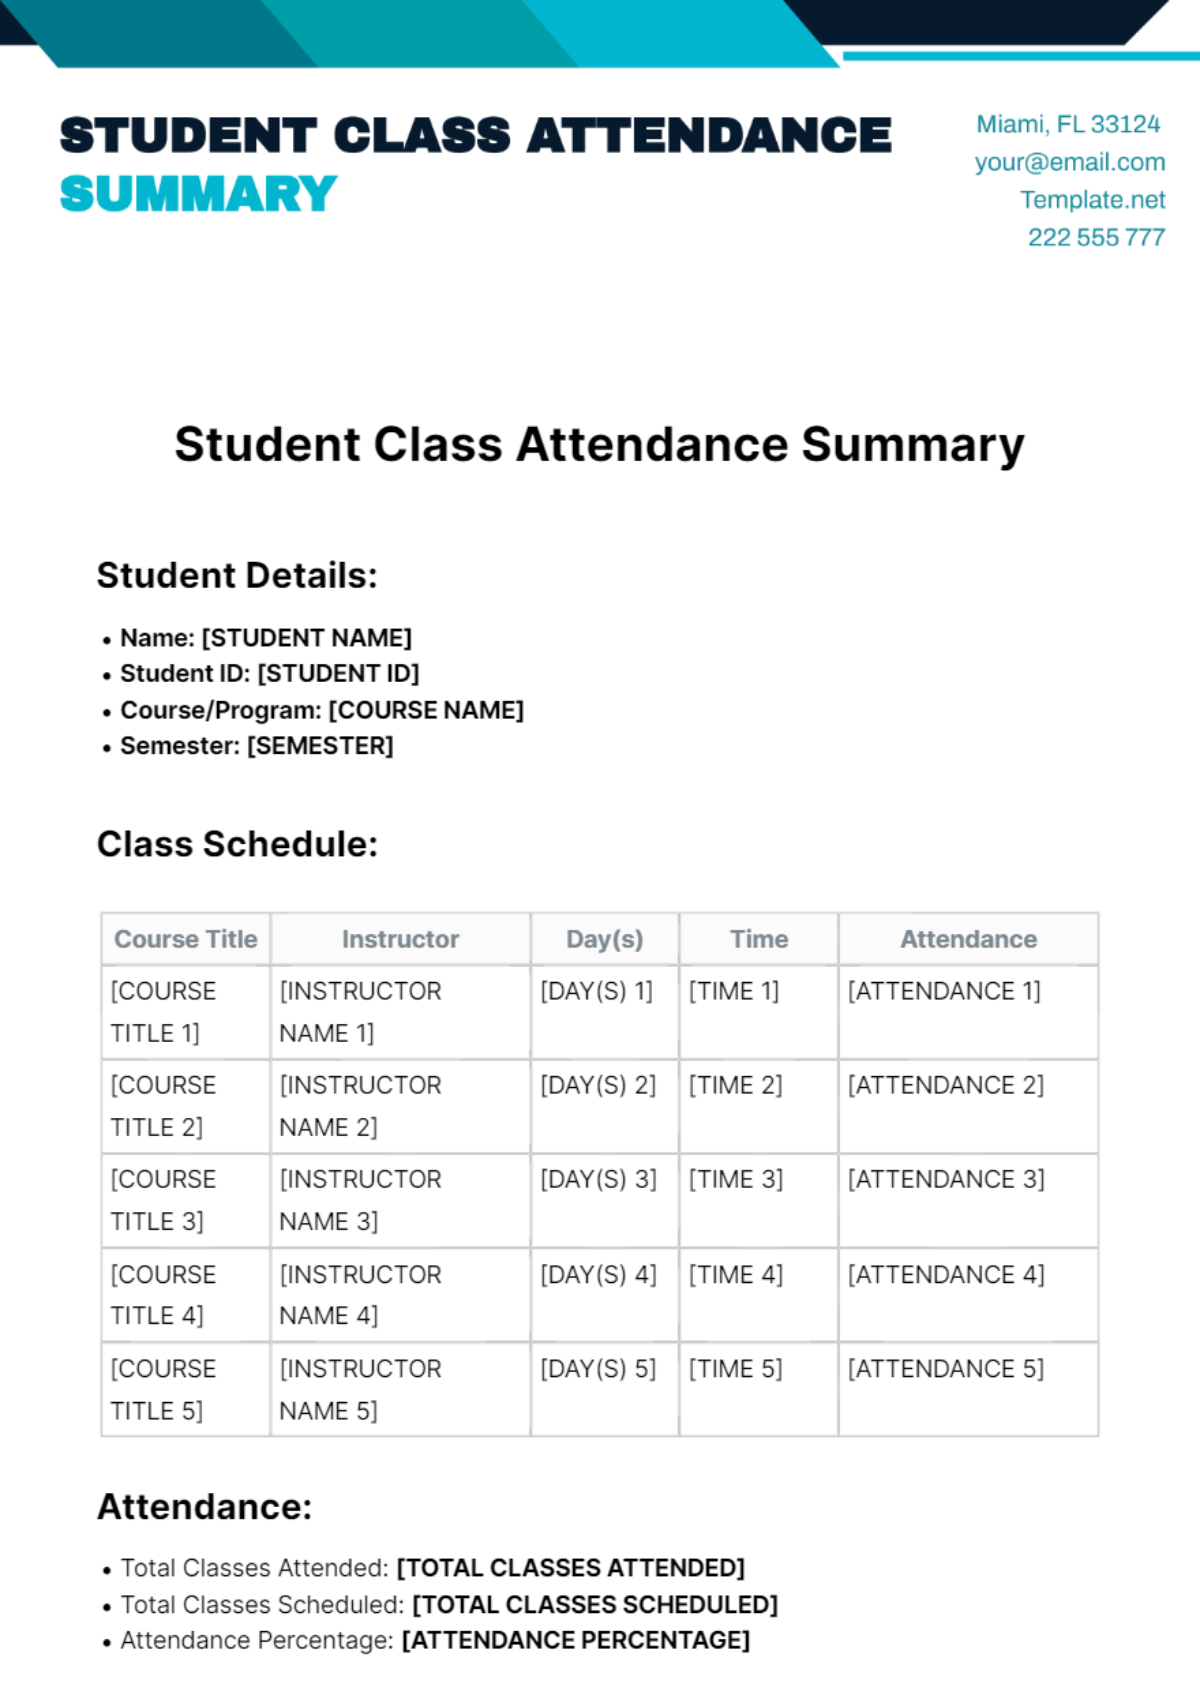 Student Class Attendance Summary Template